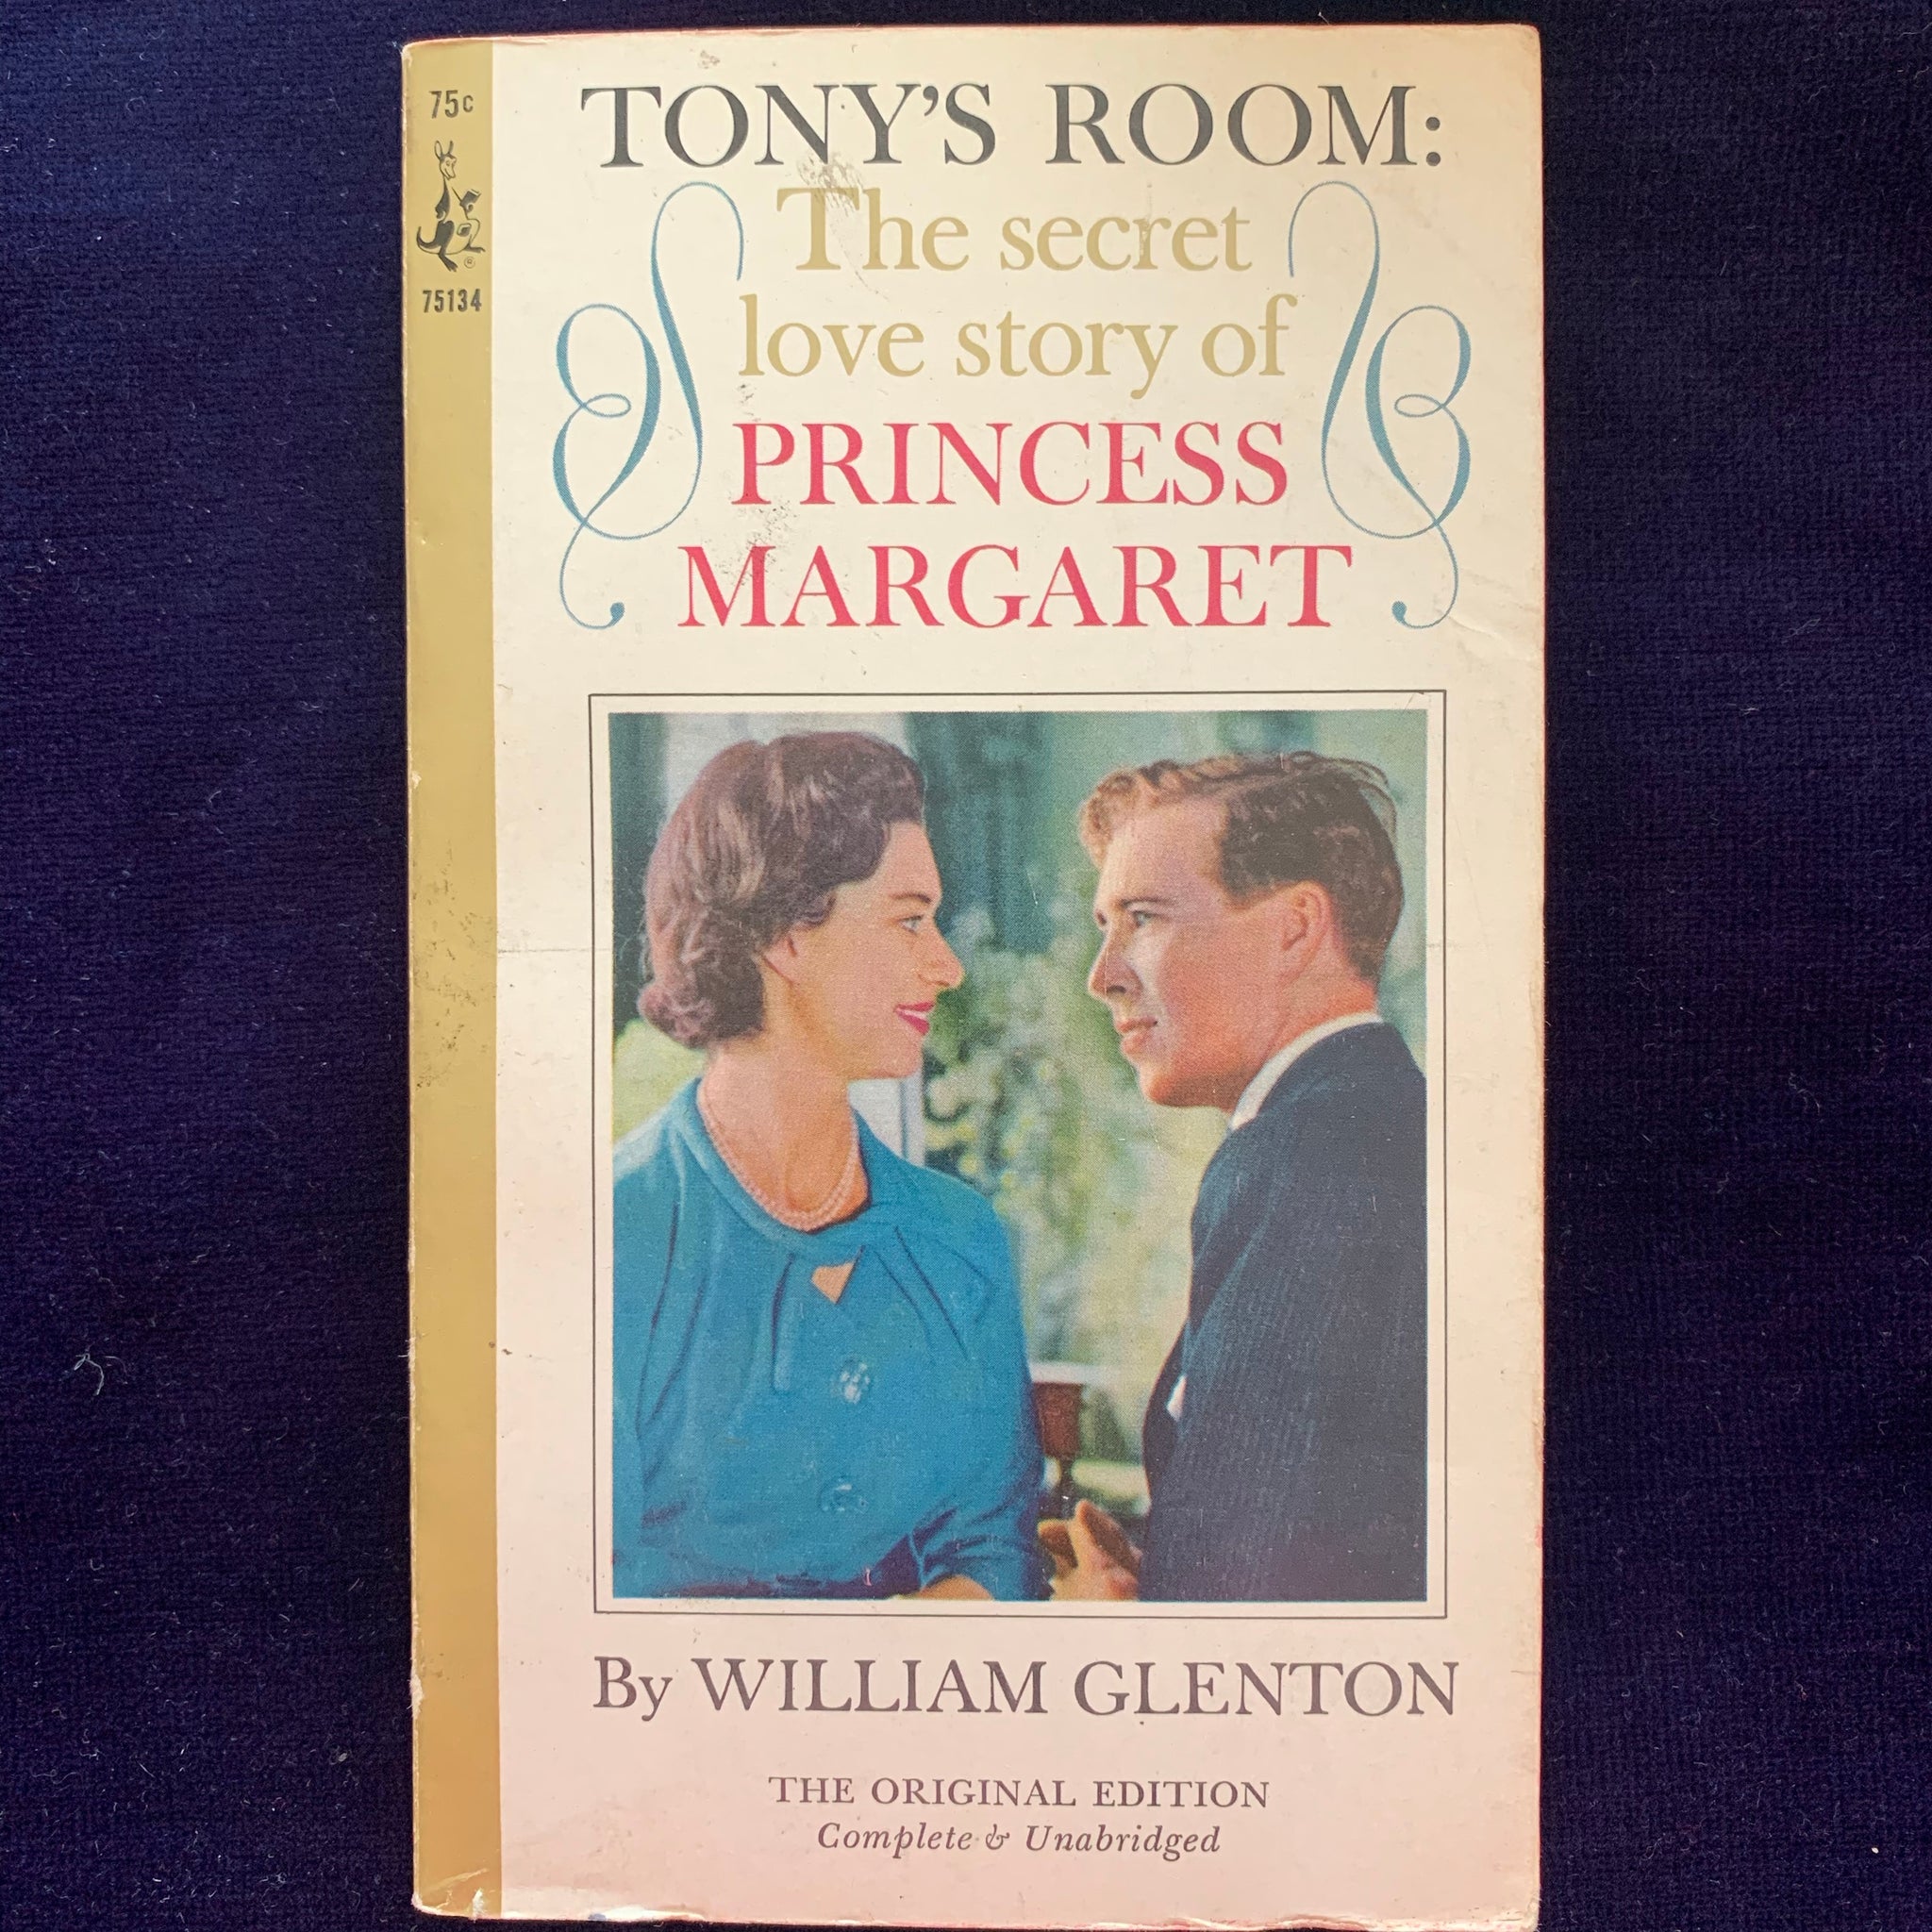 Tony’s Room: The Secret Love Story of Princess Margaret